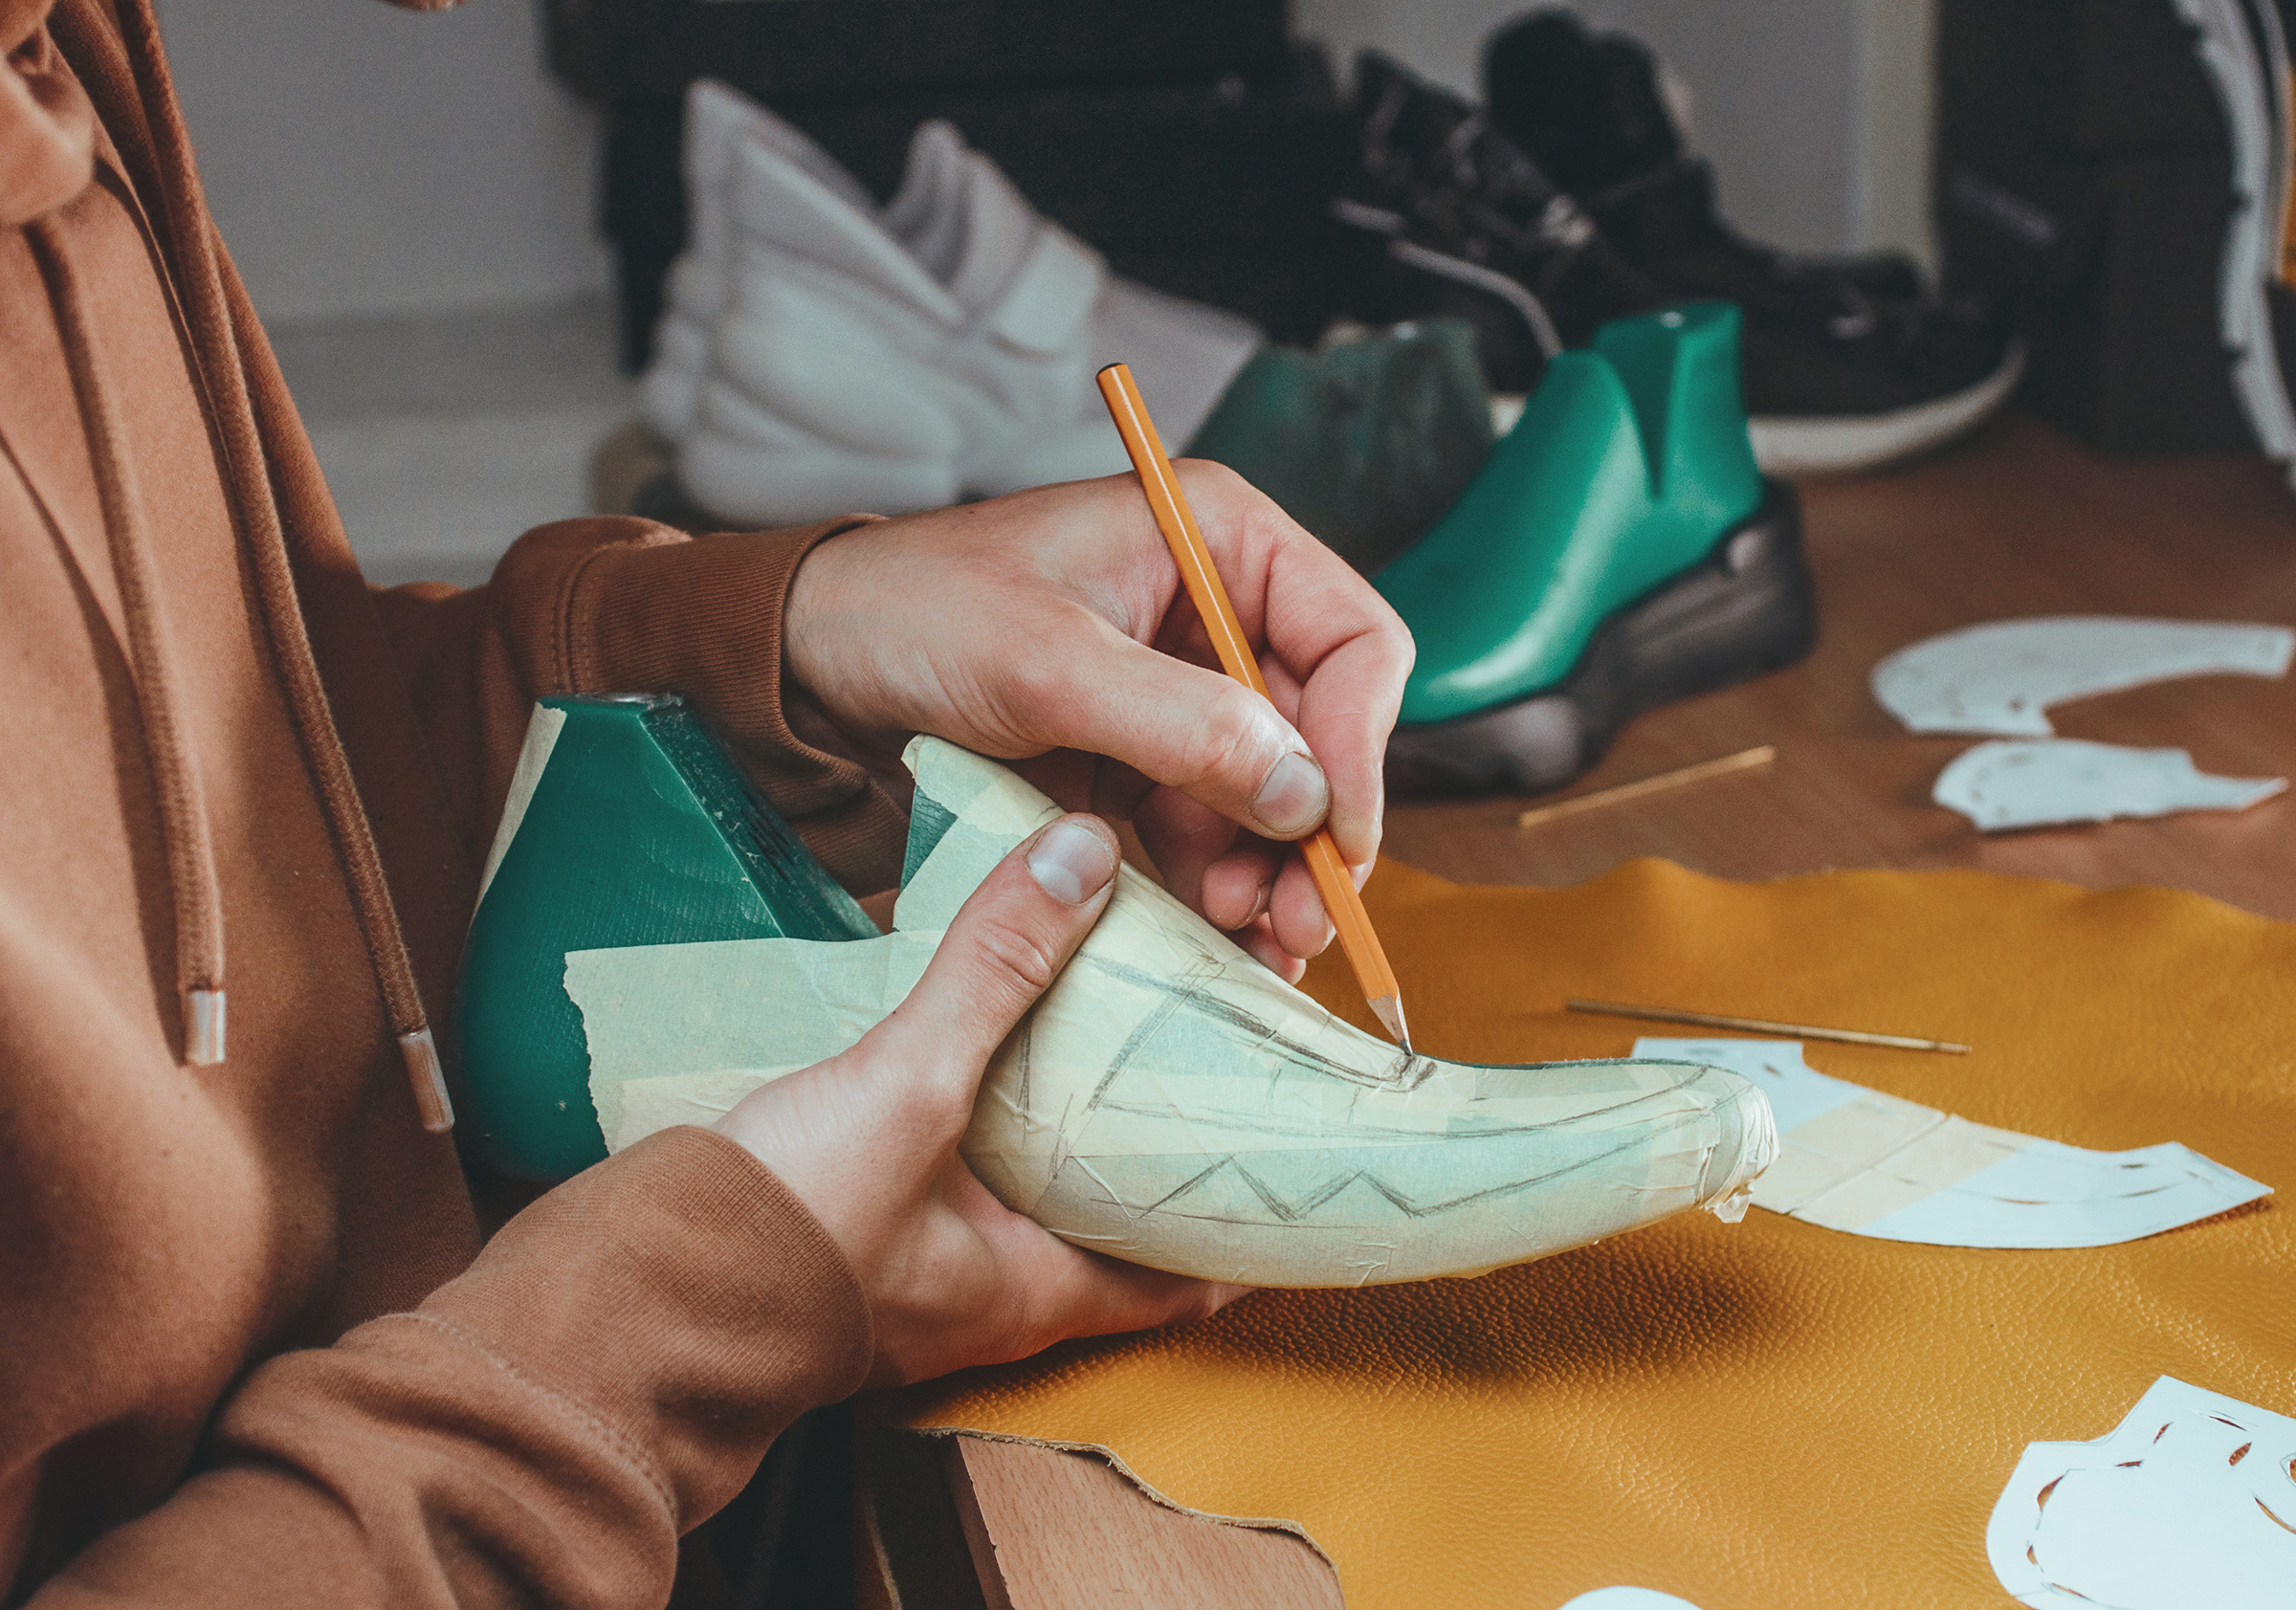 Fashion designer working on new shoe design